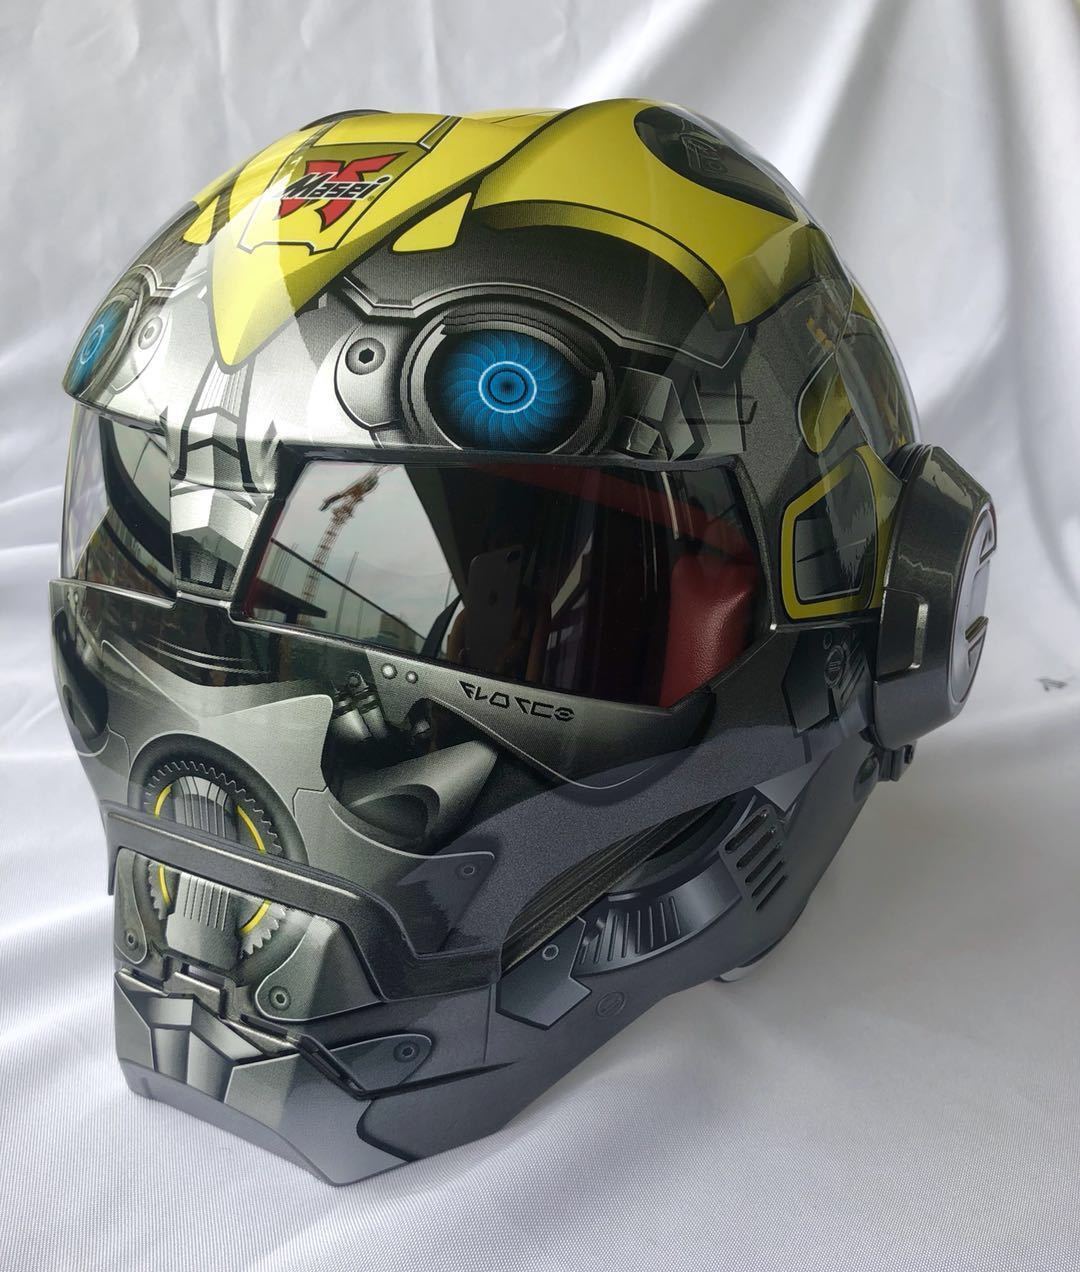 MASEI 610 TRANSFORMERS BUMBLEBEE MOTORCYCLE HARLEY OPEN FACE ARAI SHOEI HELMET - Helmets